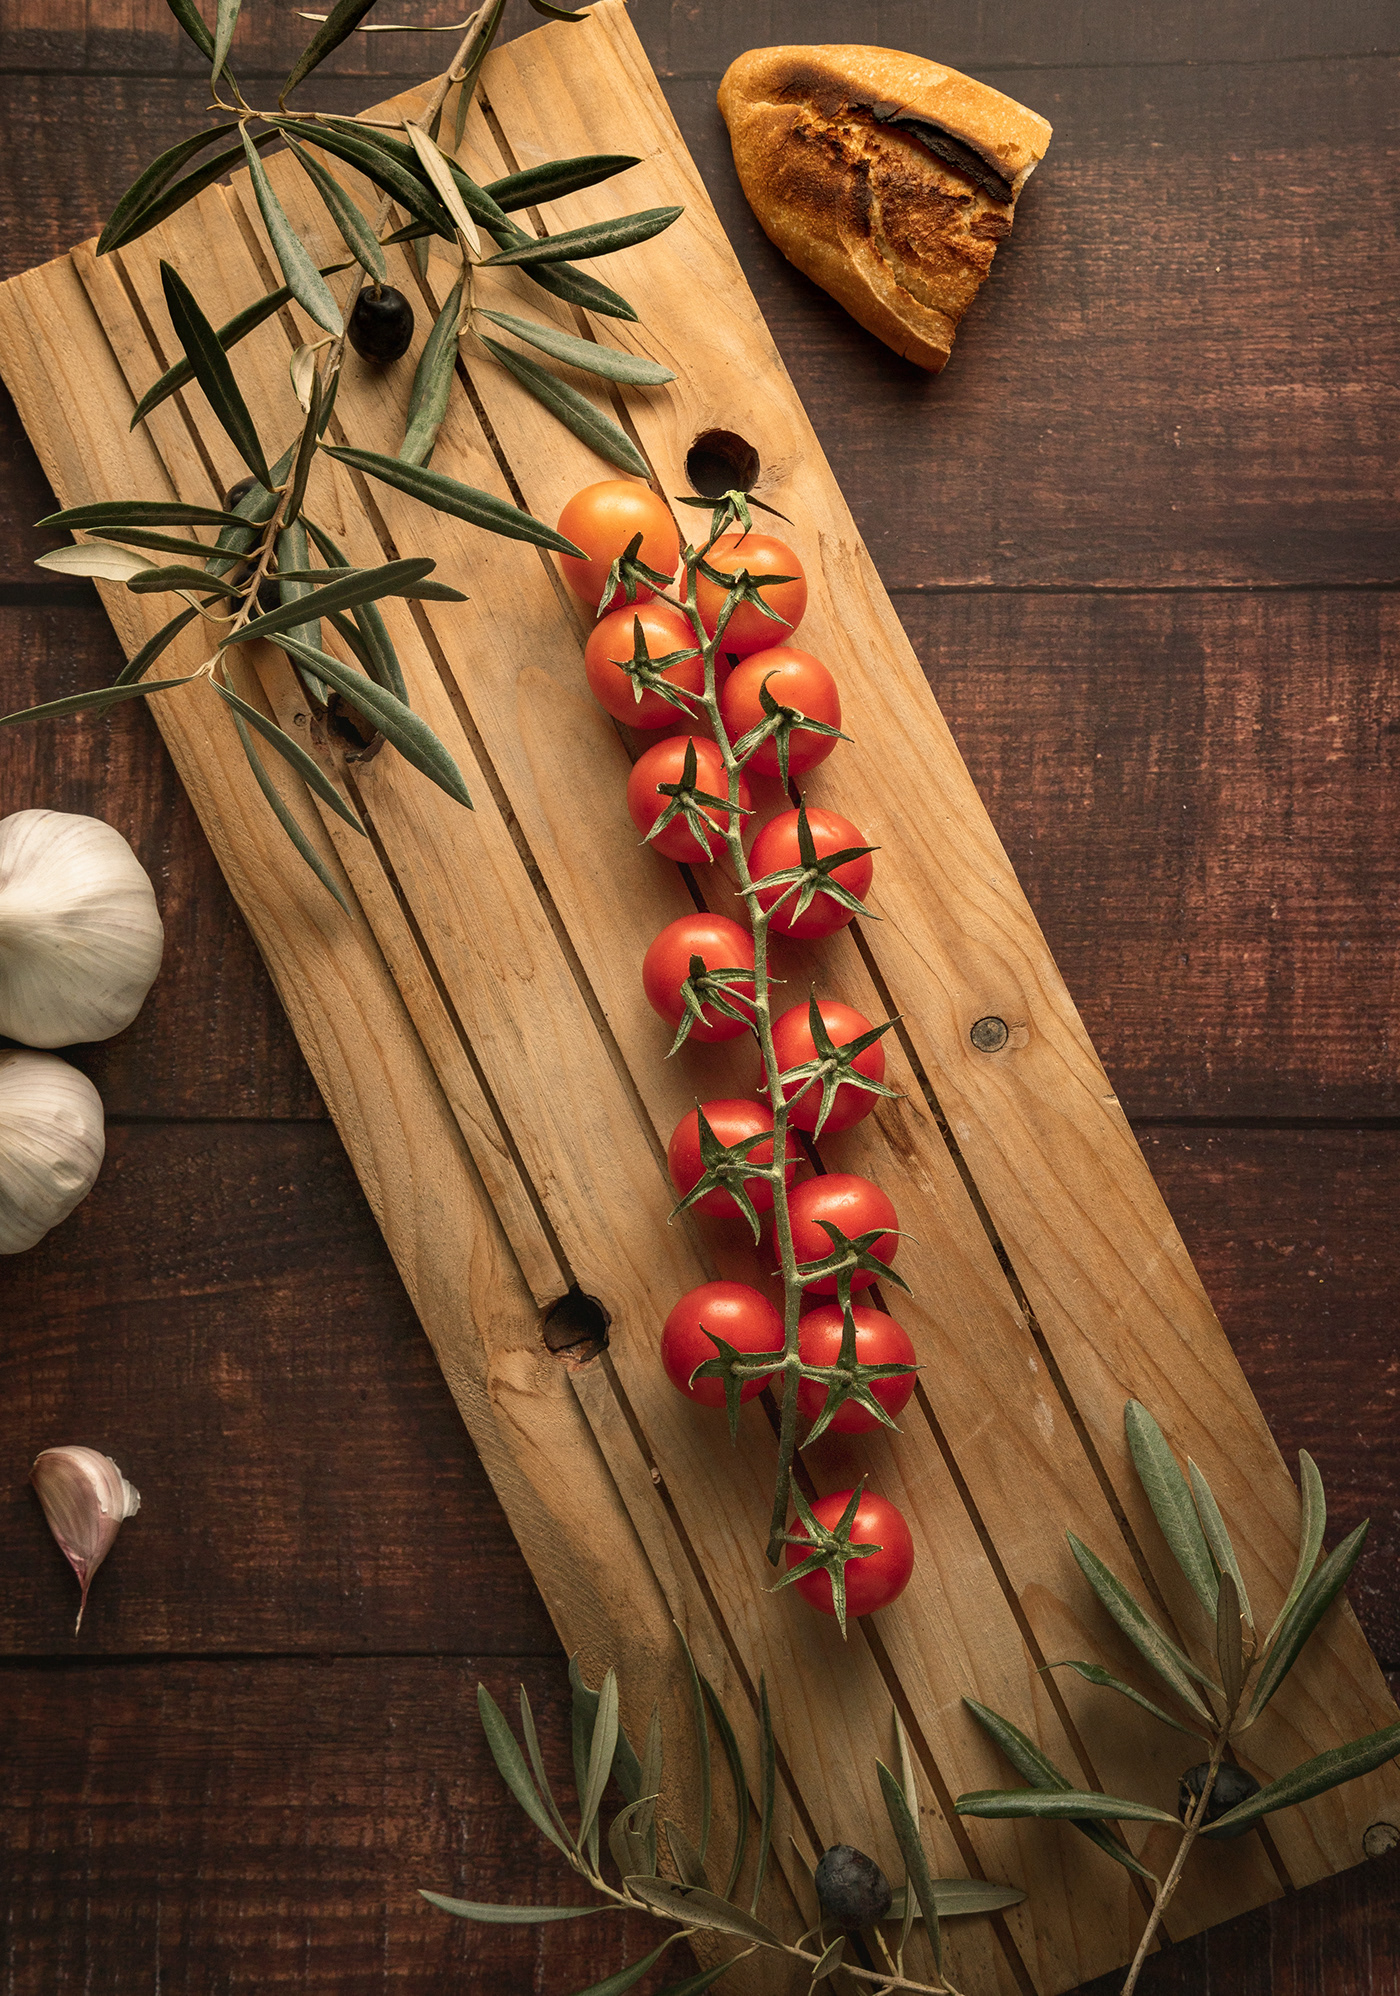 AOVE extra virgin olive oil bottle Tomato Mediterranean style mediterranean food